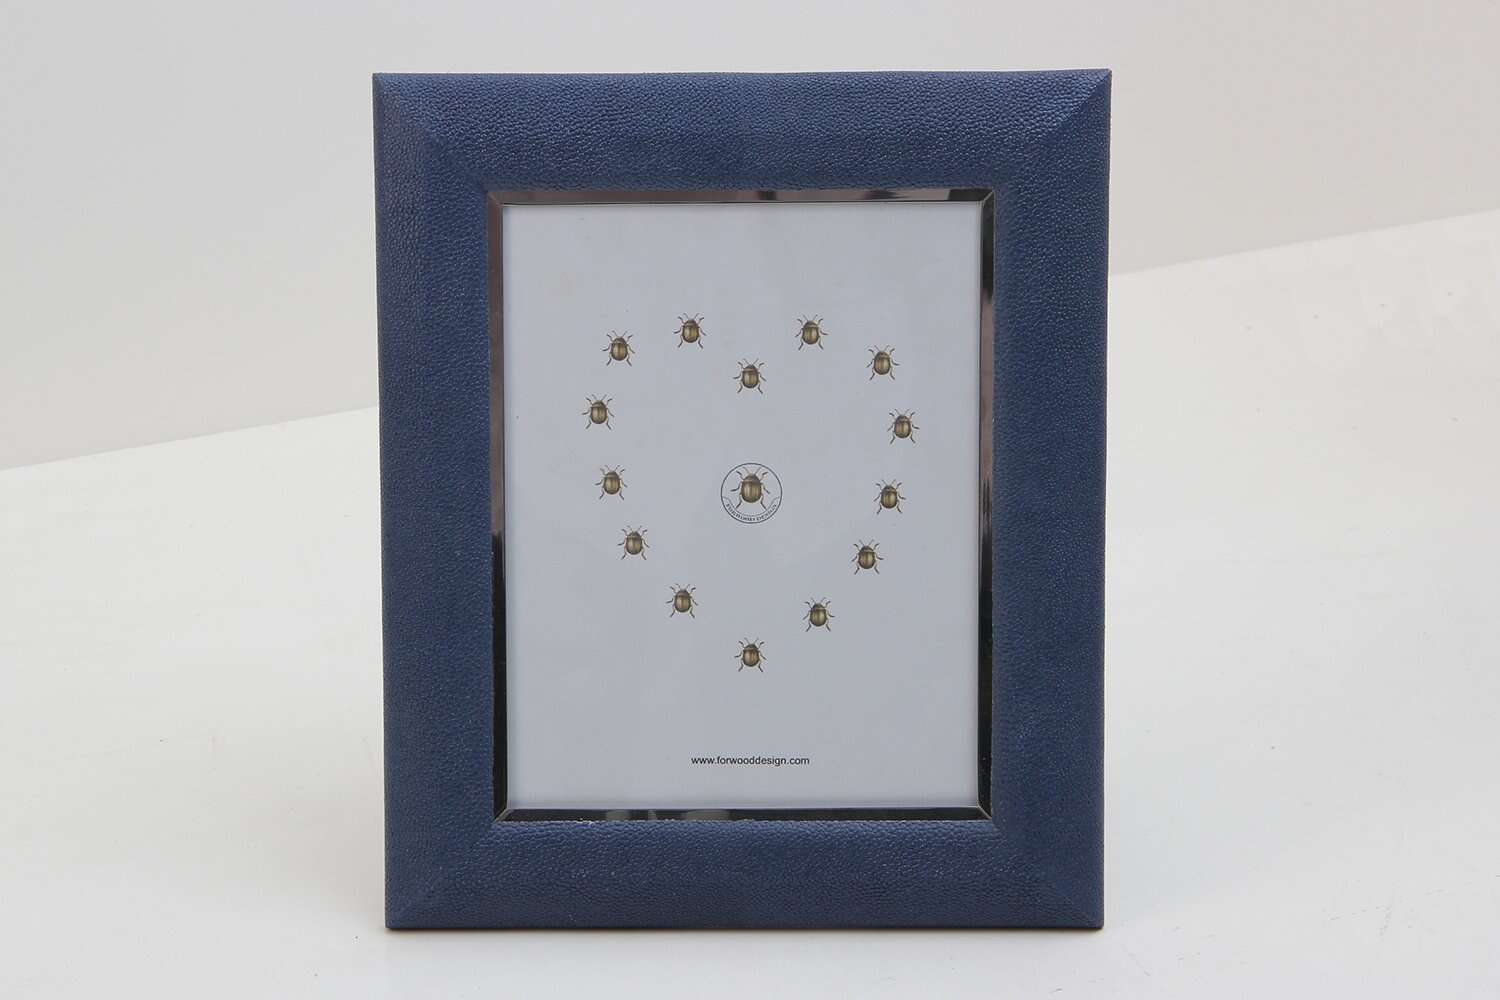 10" x 8" blue shagreen photo frame luxury gift present